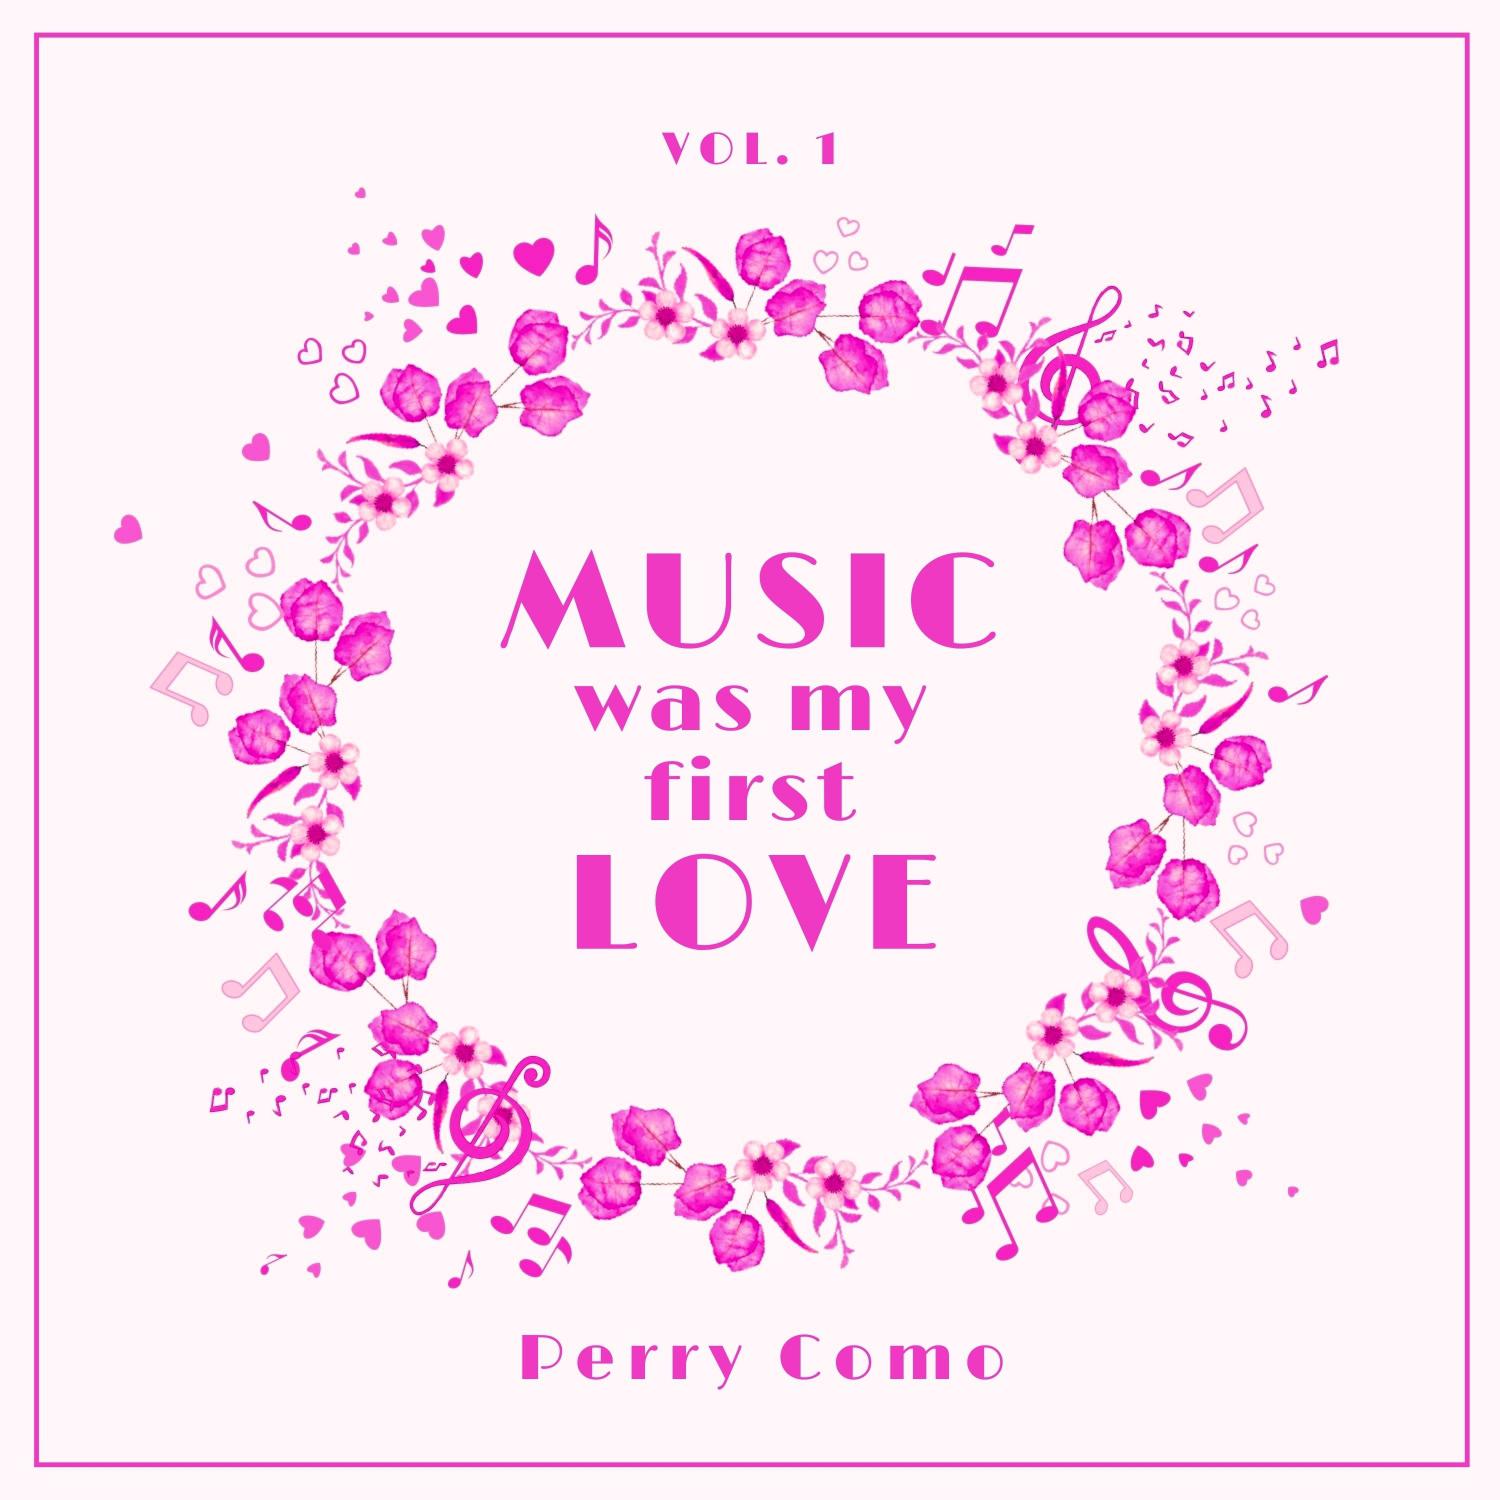 Perry Como - When I Fall in Love (Original Mix)